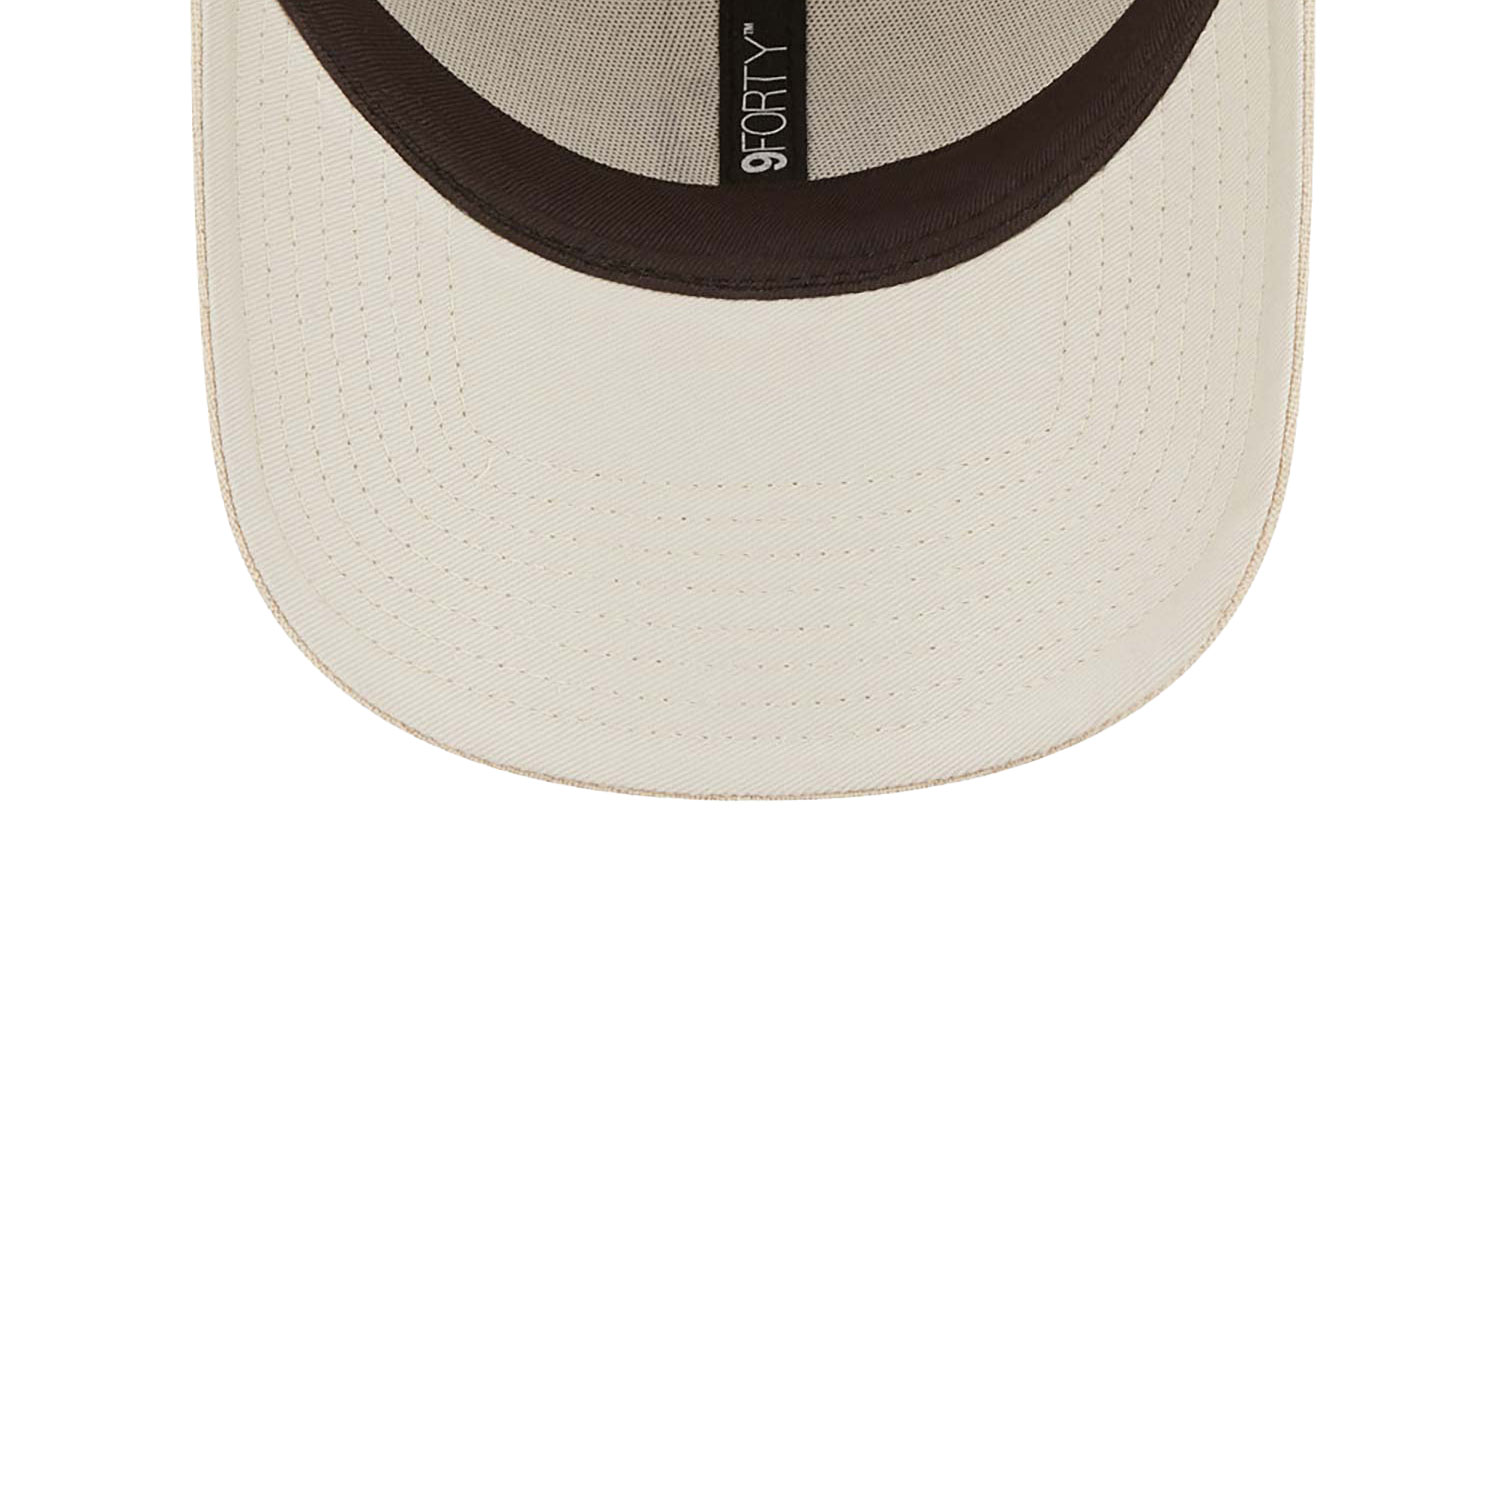 New York Yankees Linen Cream 9FORTY Adjustable Cap